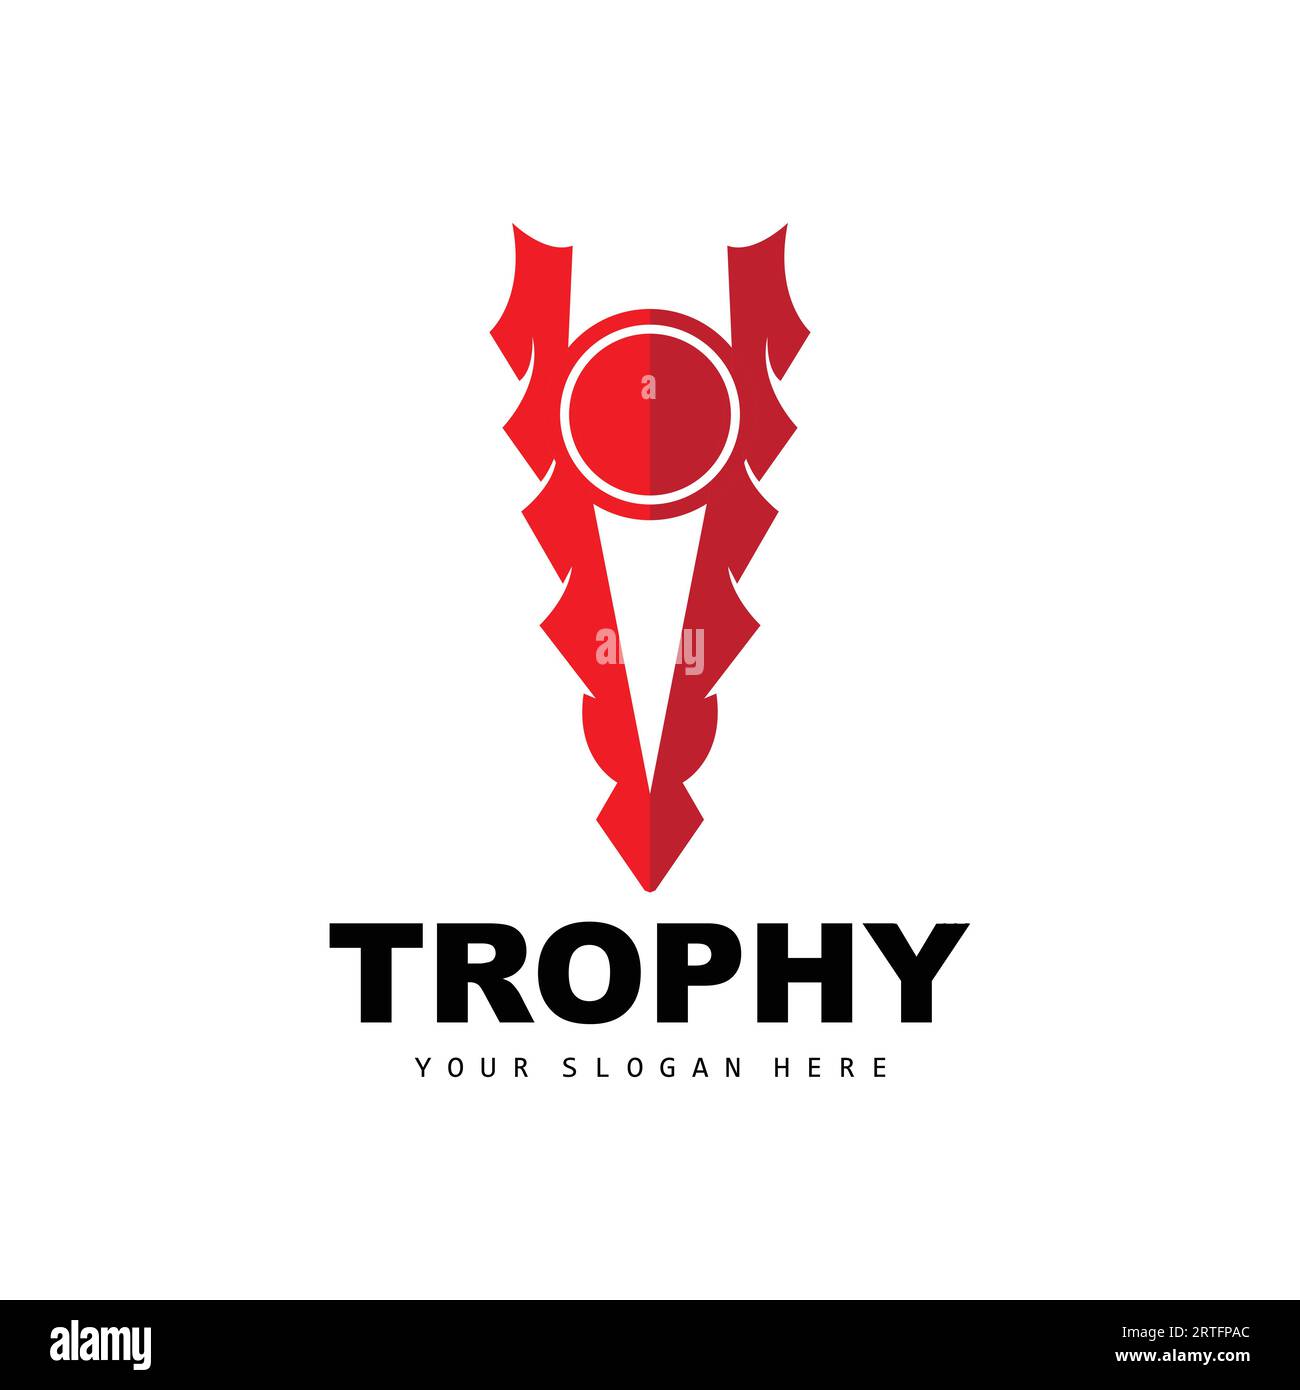 Championship Trophy Logo, Champion Award Winner Trophy Design, Vector Icon Template Stock Vector